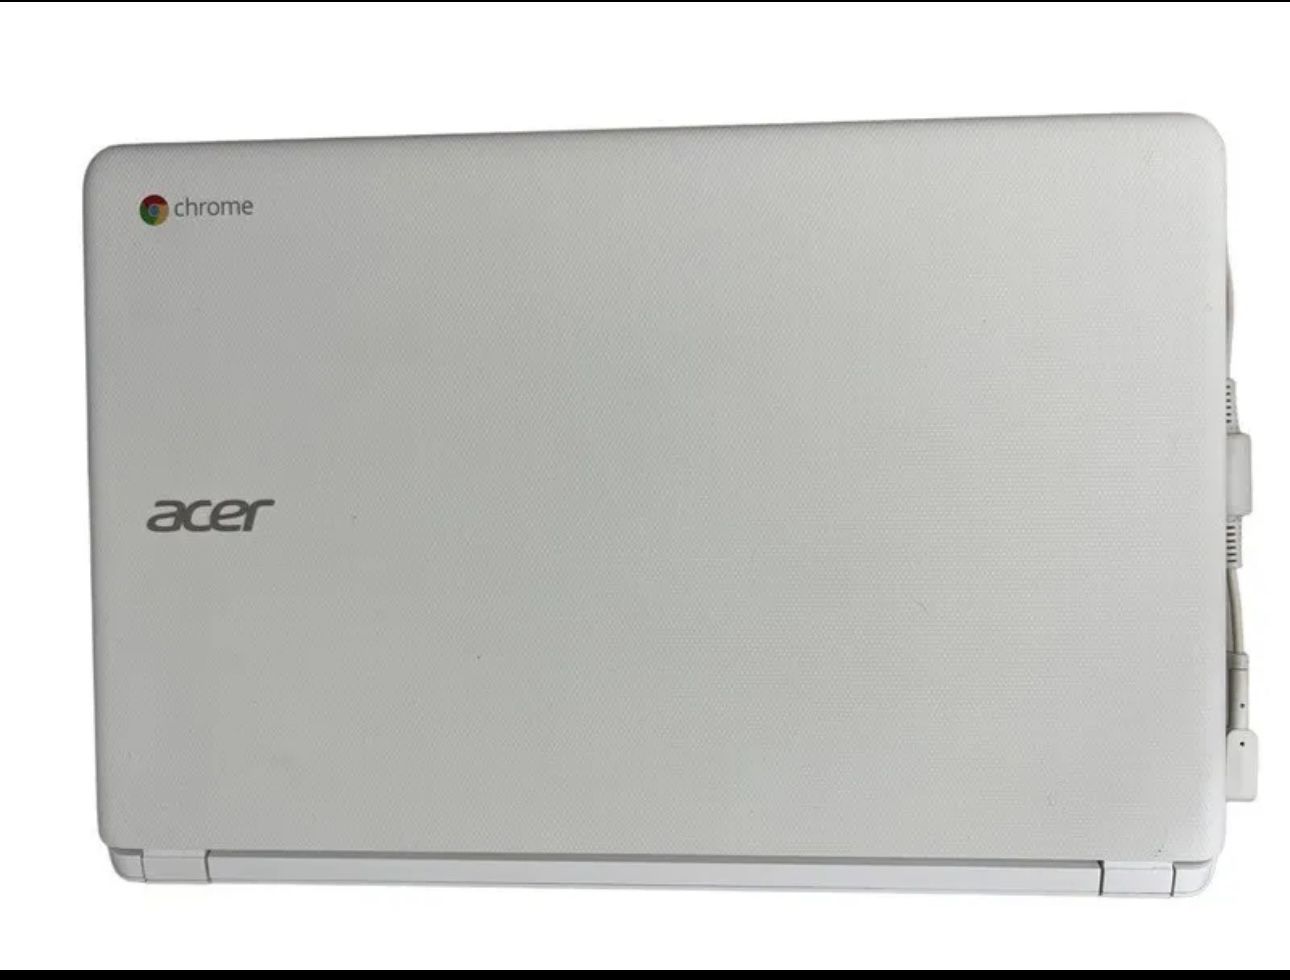 Acer Chromebook 15 5th Gen Intel Processor 100GB Google Drive 4GB RAM 1080 HD